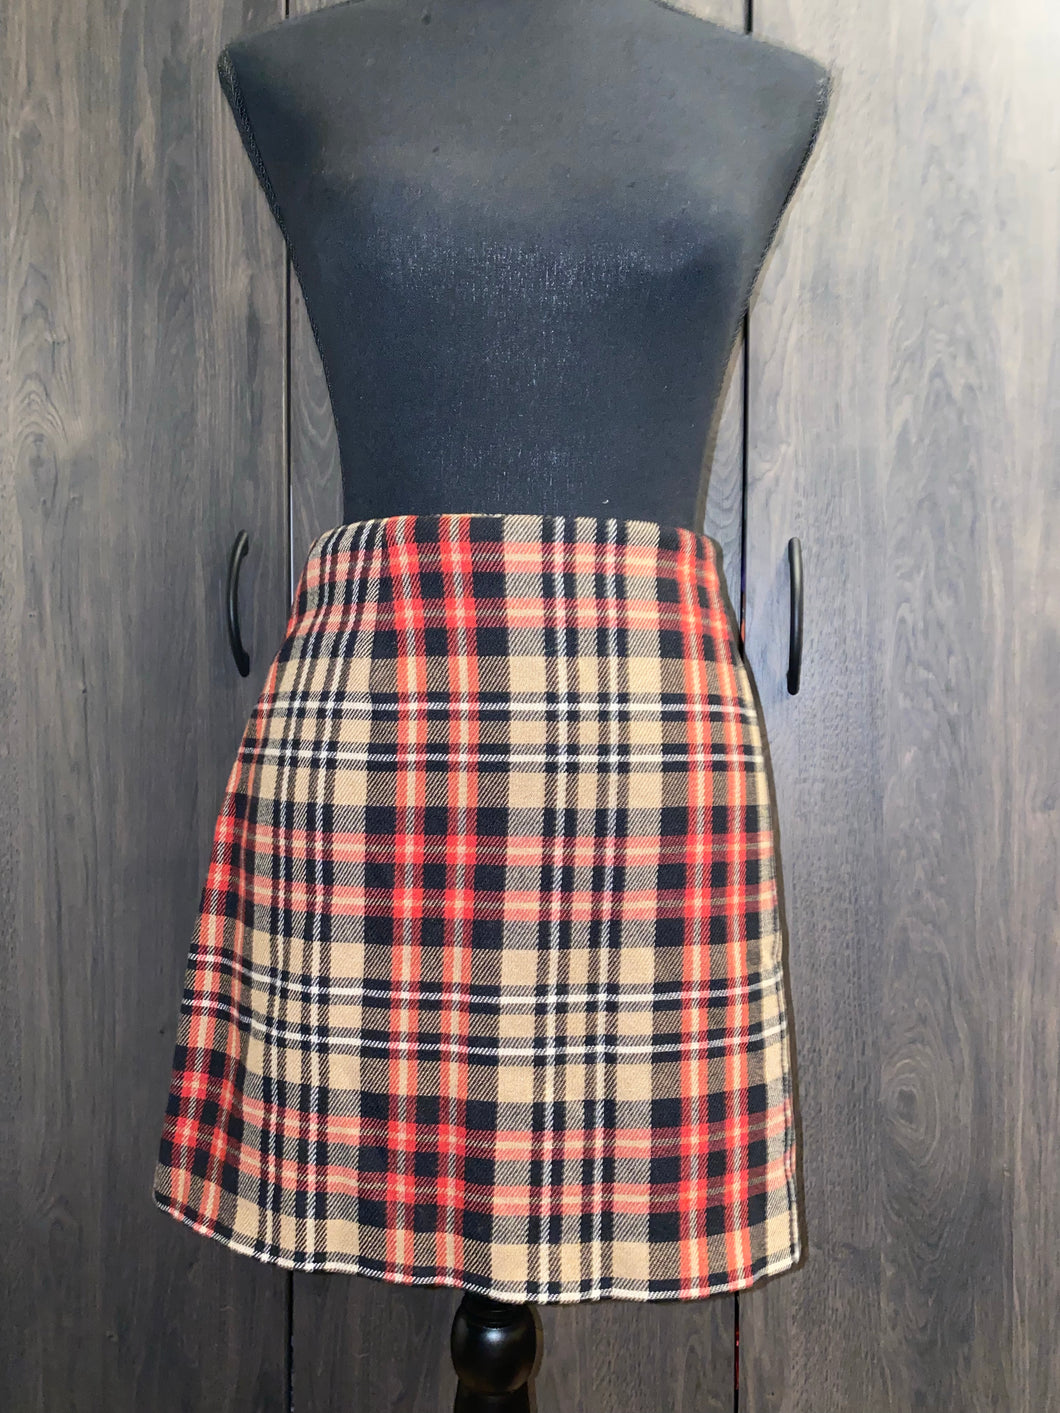 “The Limited” Plaid mini skirt